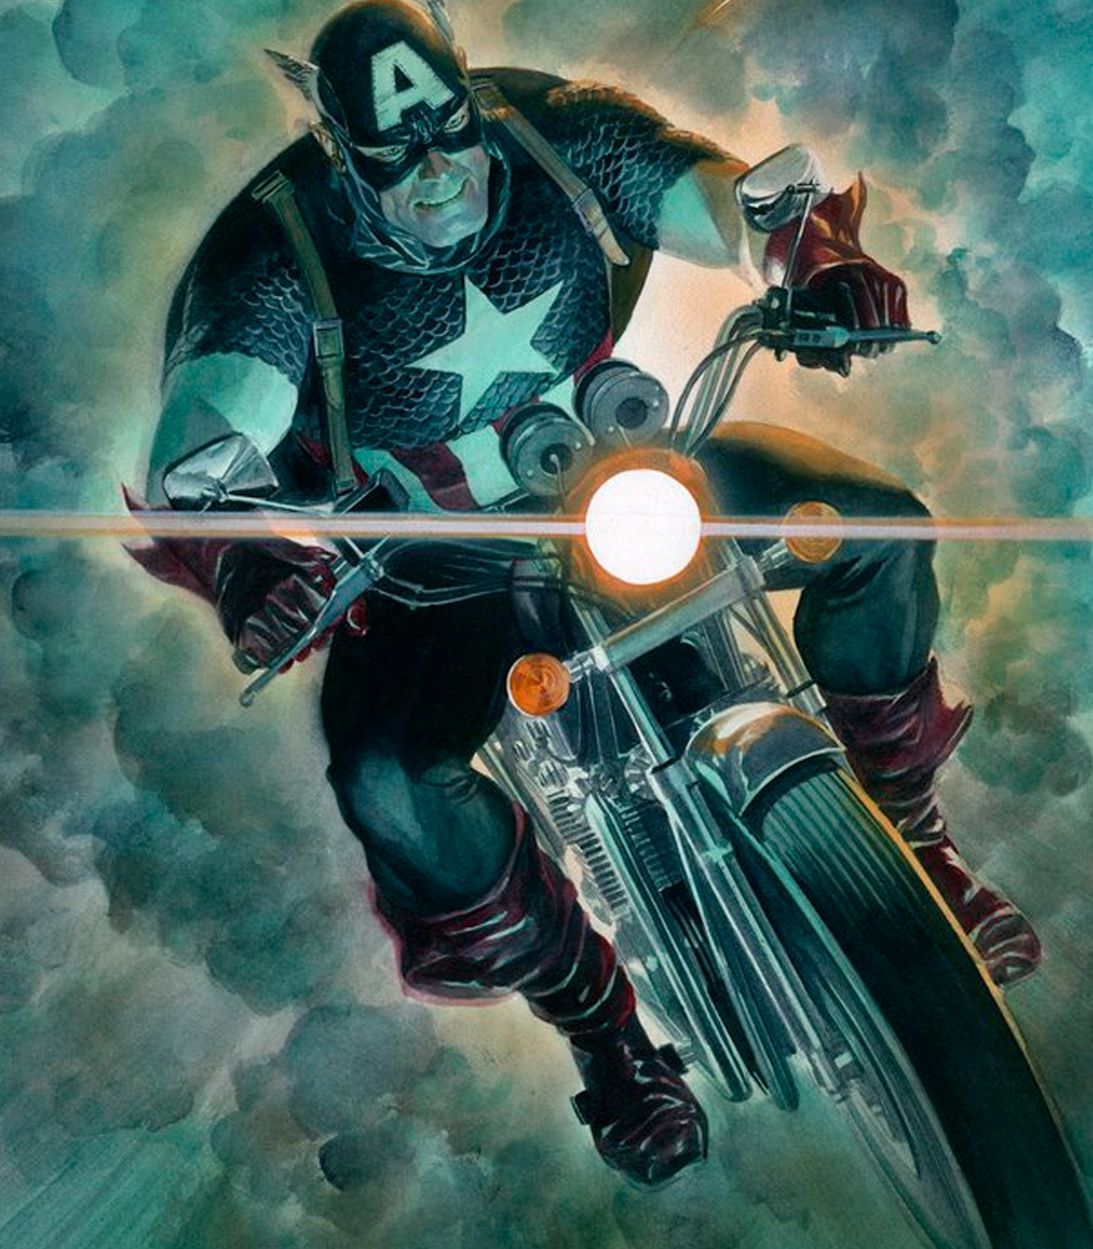 Captain America #700 by Alex Ross